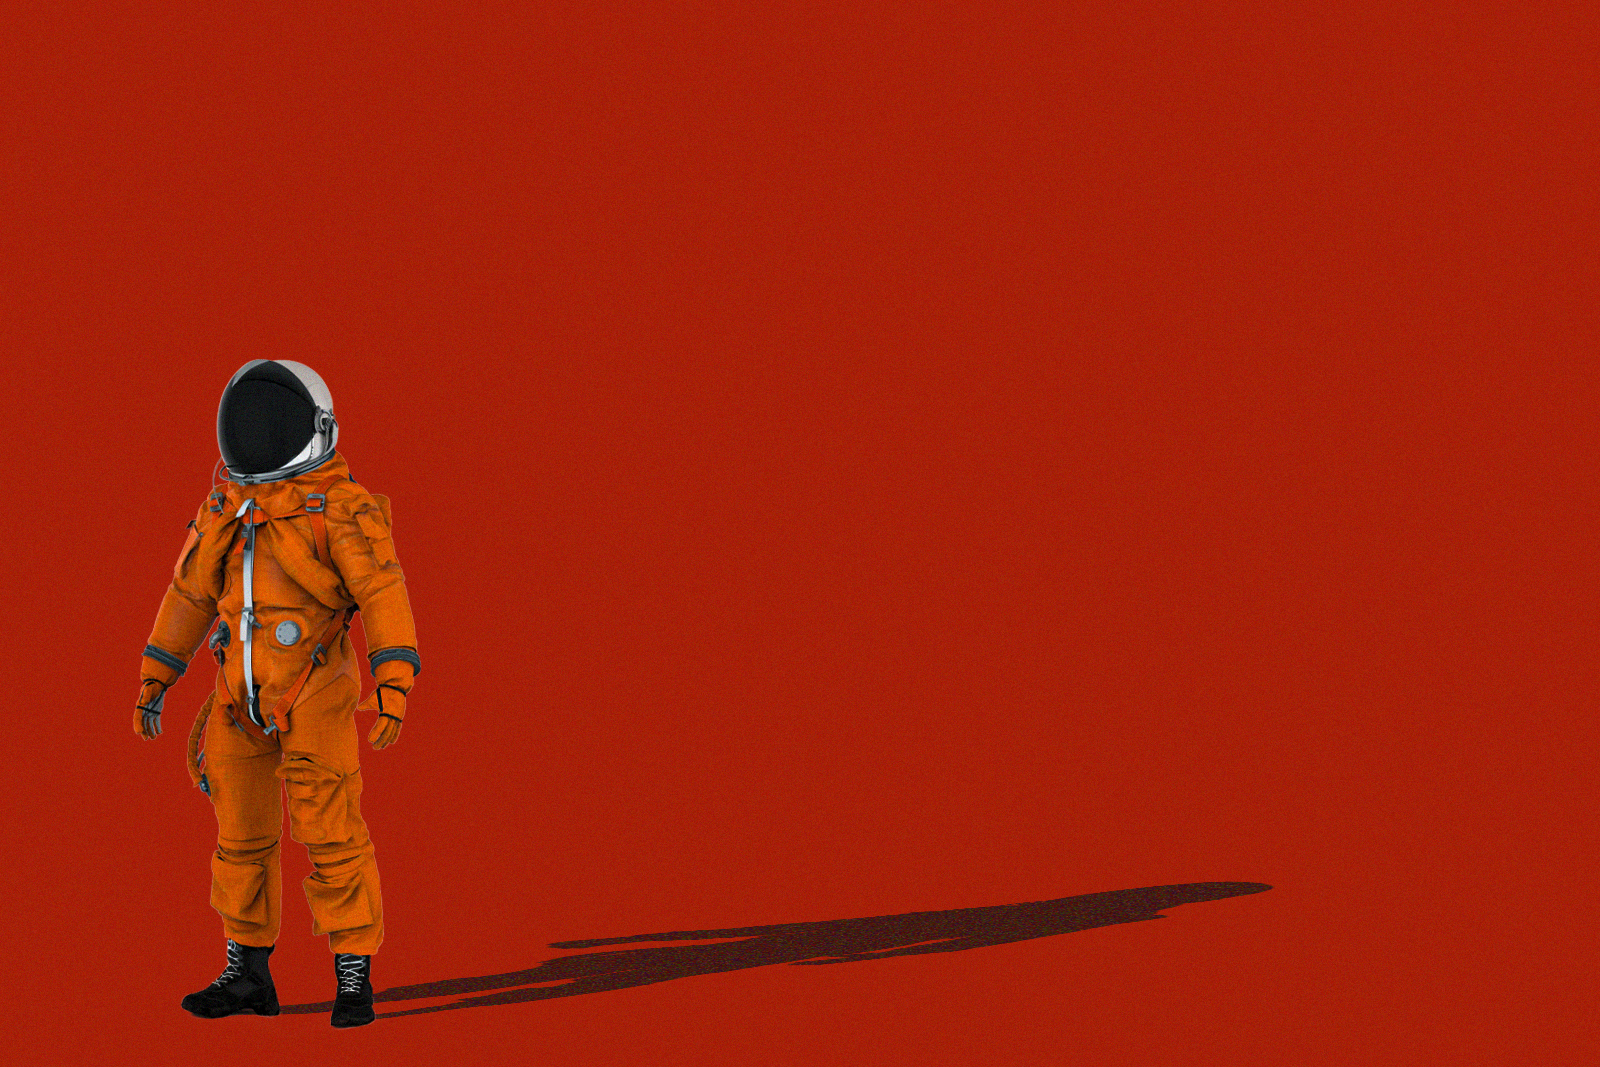 Solo astronaut